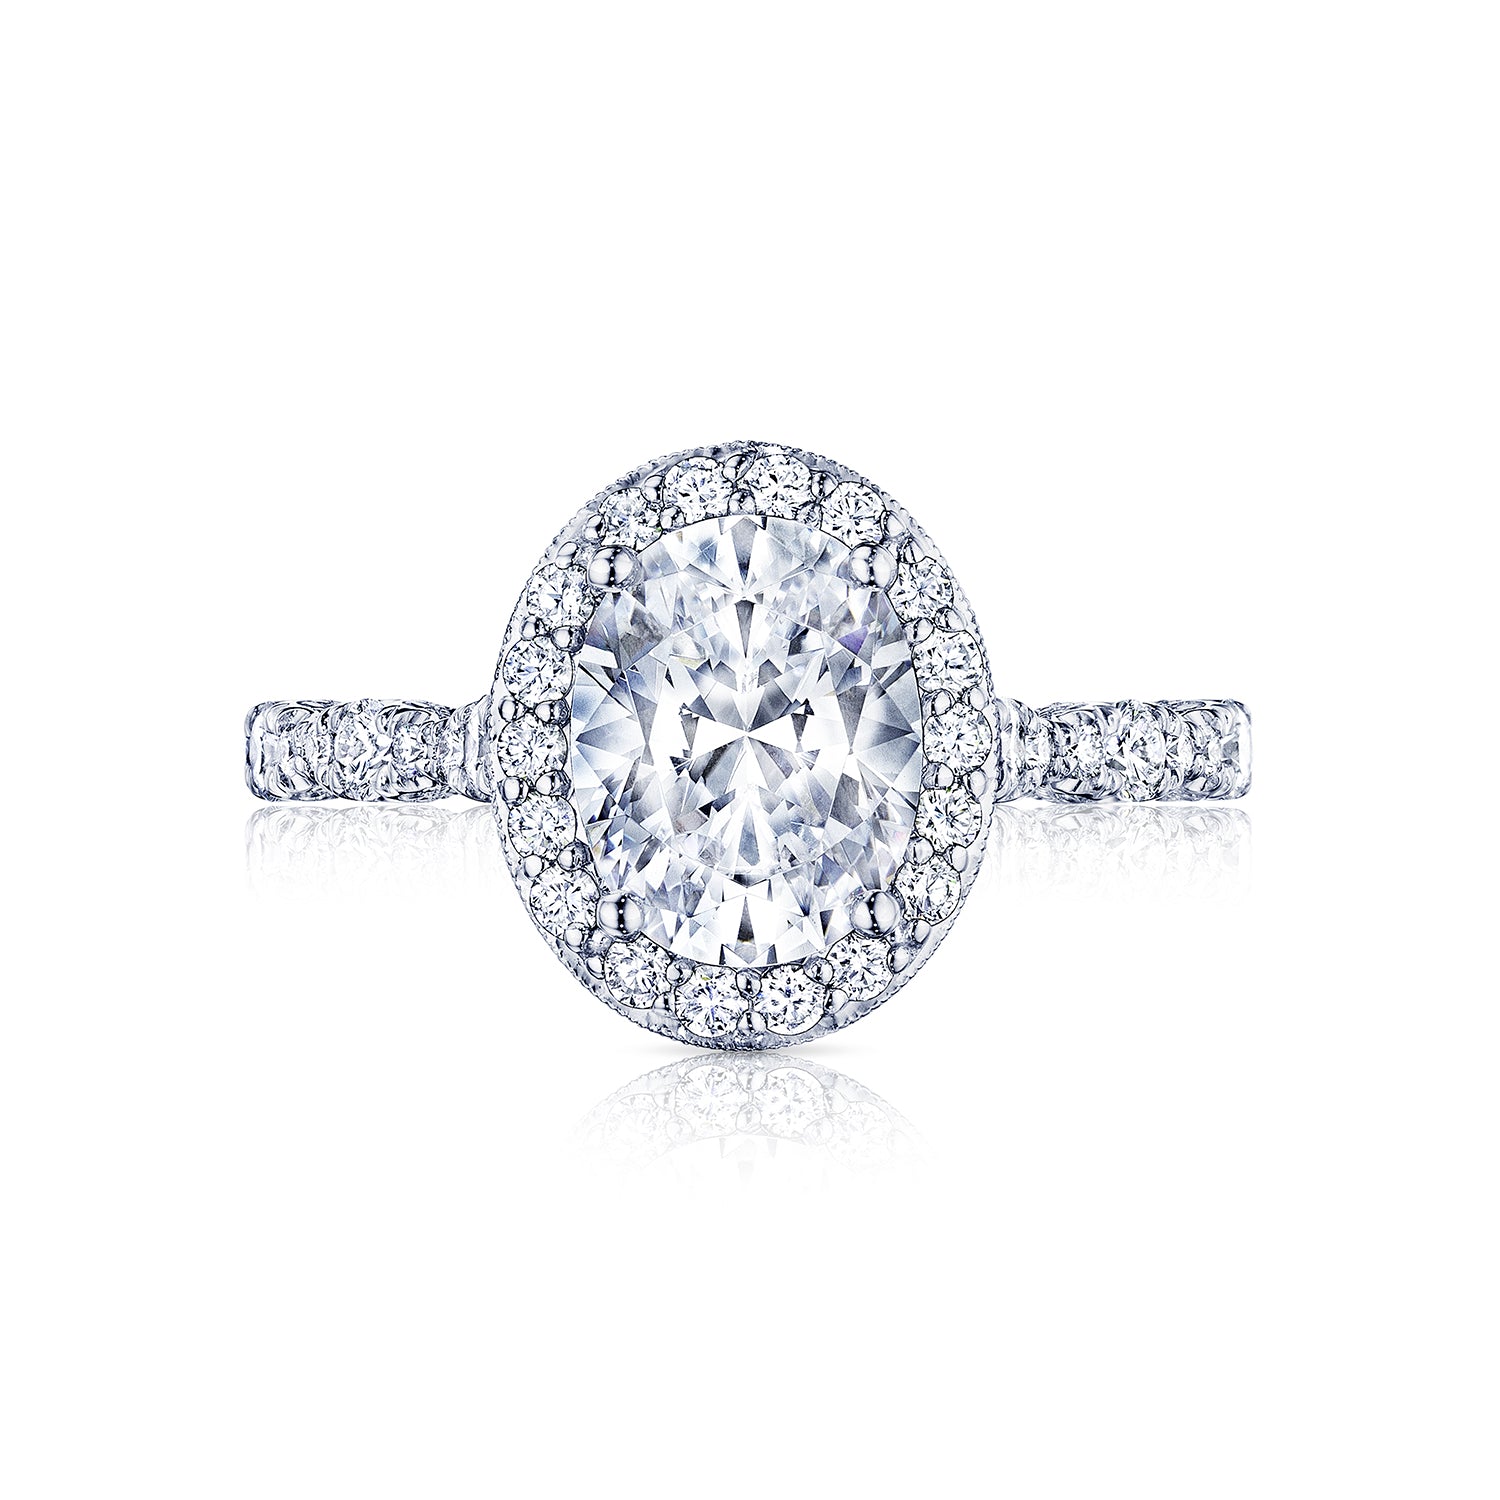 TACORI Petite Crescent Oval Diamond Engagement Ring